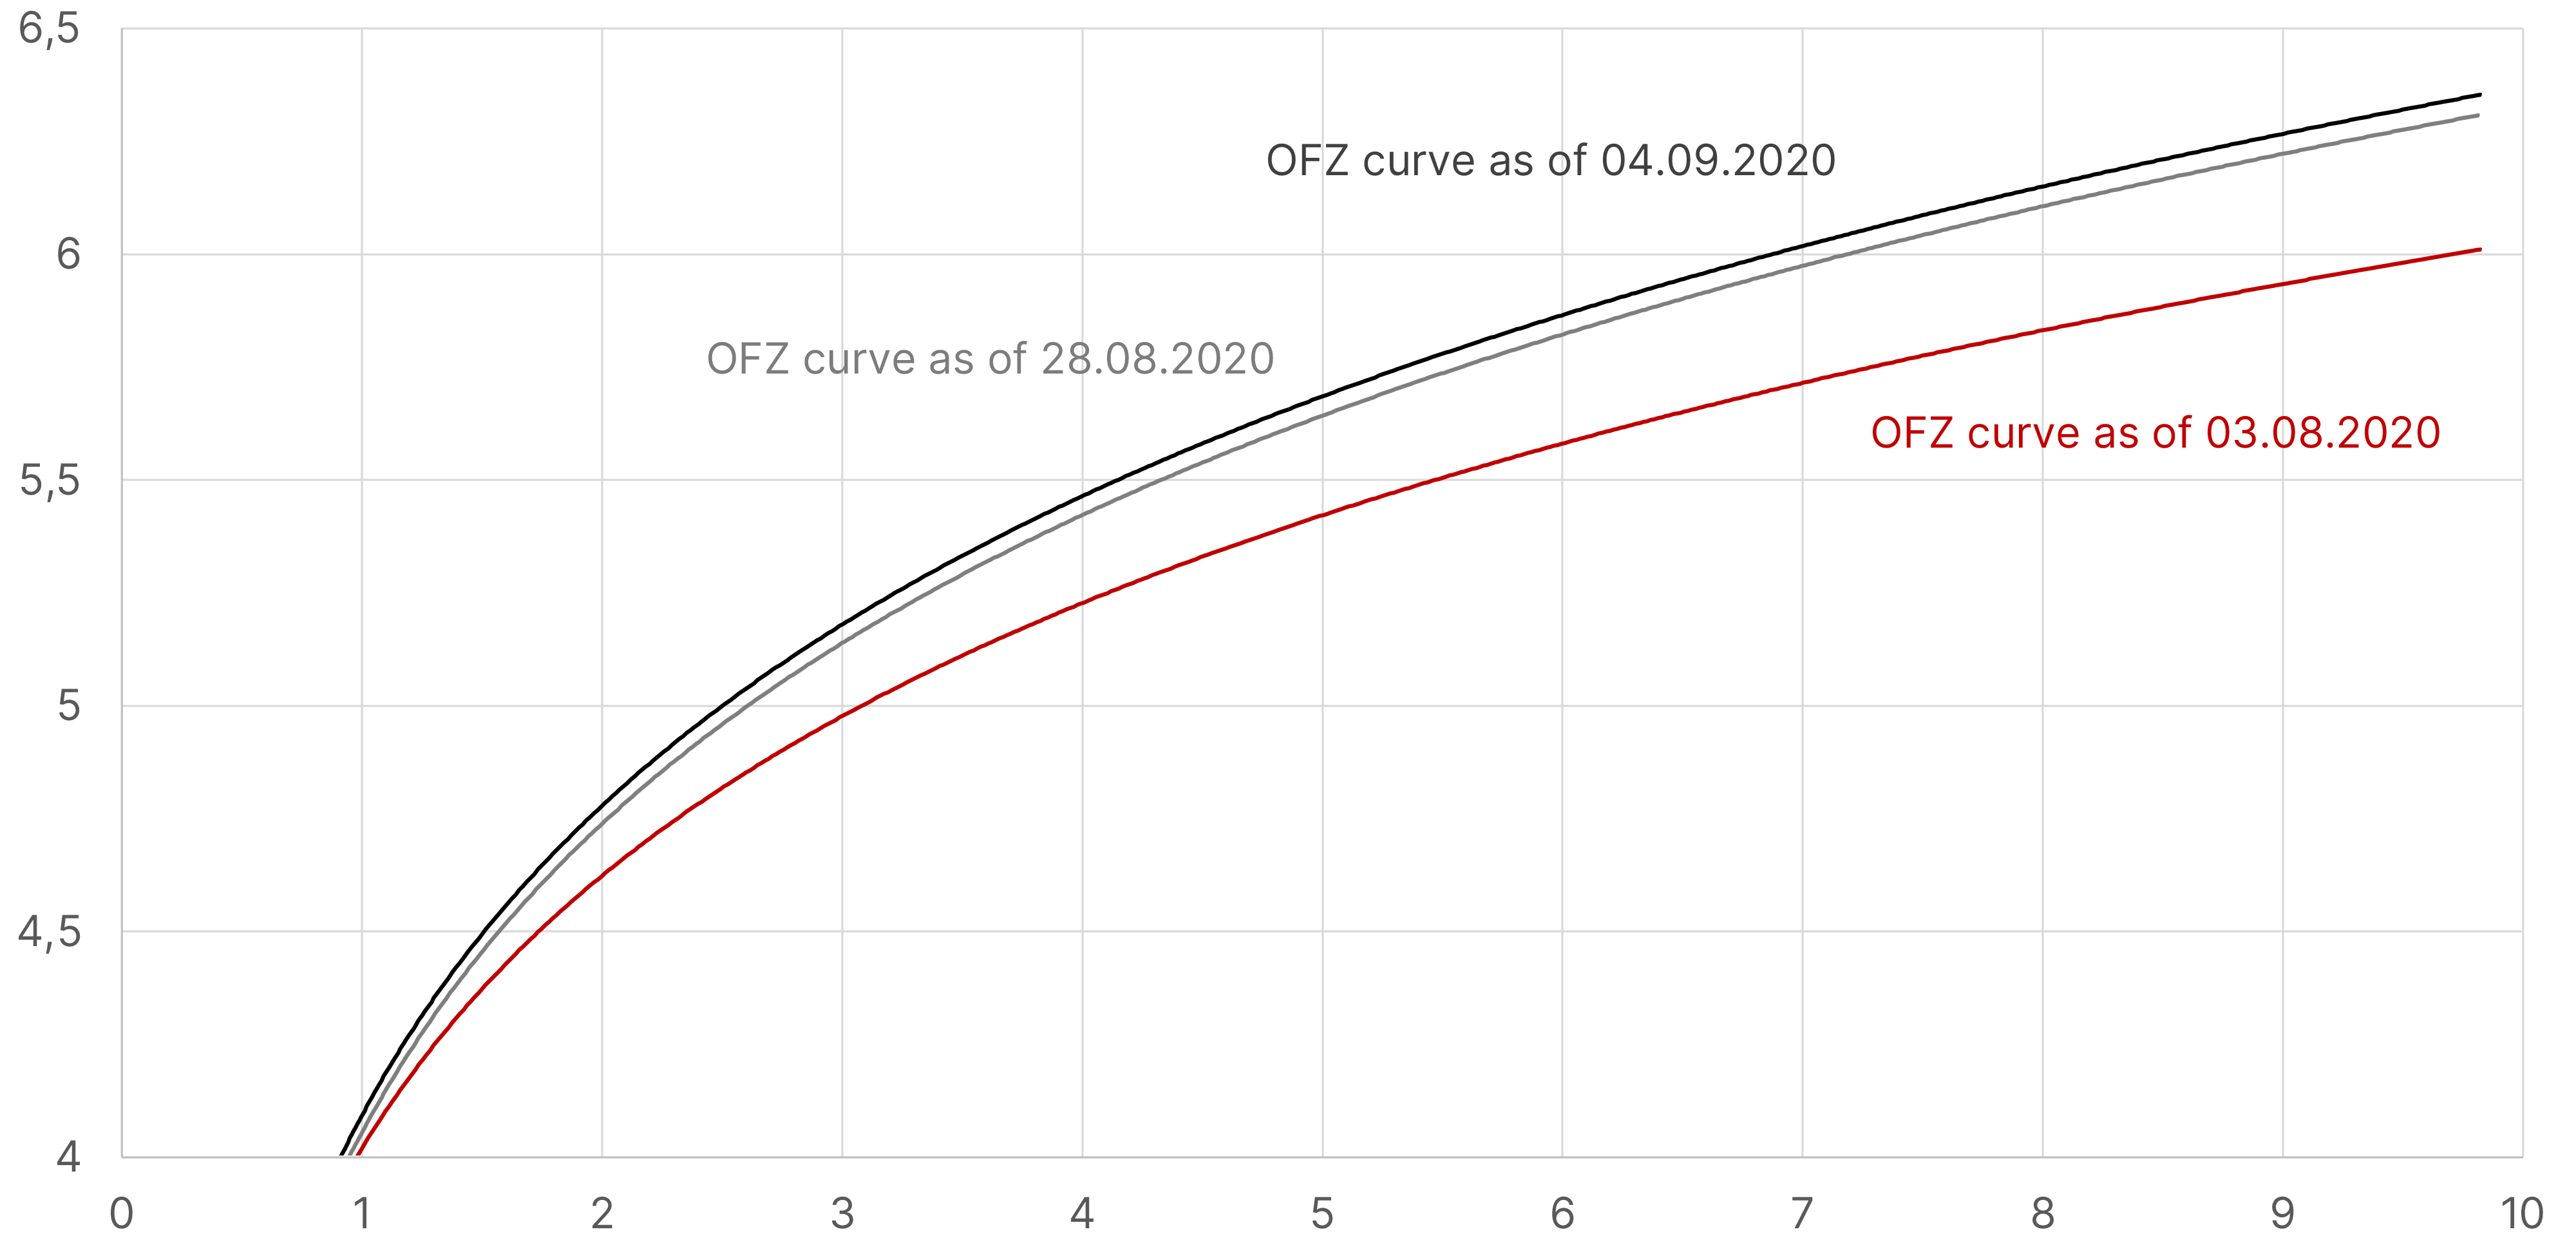 Sovereign curve since 03.08.2020